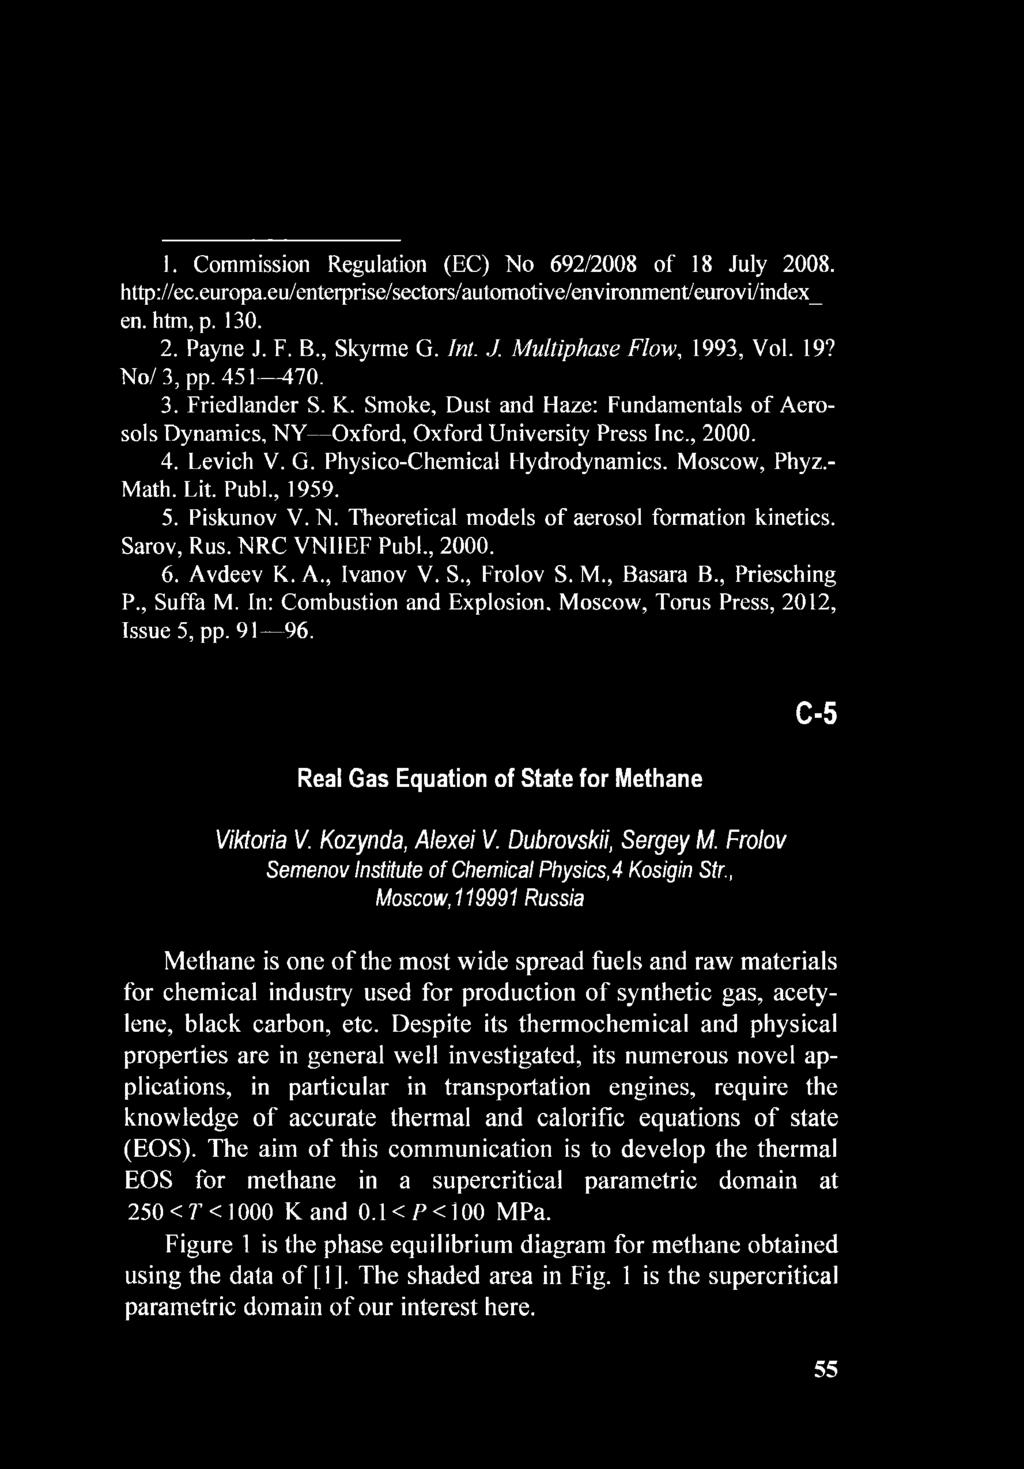 Moscow, Phyz.- Math. Lit. Publ., 1959. 5. Piskunov V. N. Theoretical models of aerosol formation kinetics. Sarov, Rus. NRC VNIIEF Publ., 2000. 6. Avdeev K. A., Ivanov V. S., Frolov S. М., Basara B.